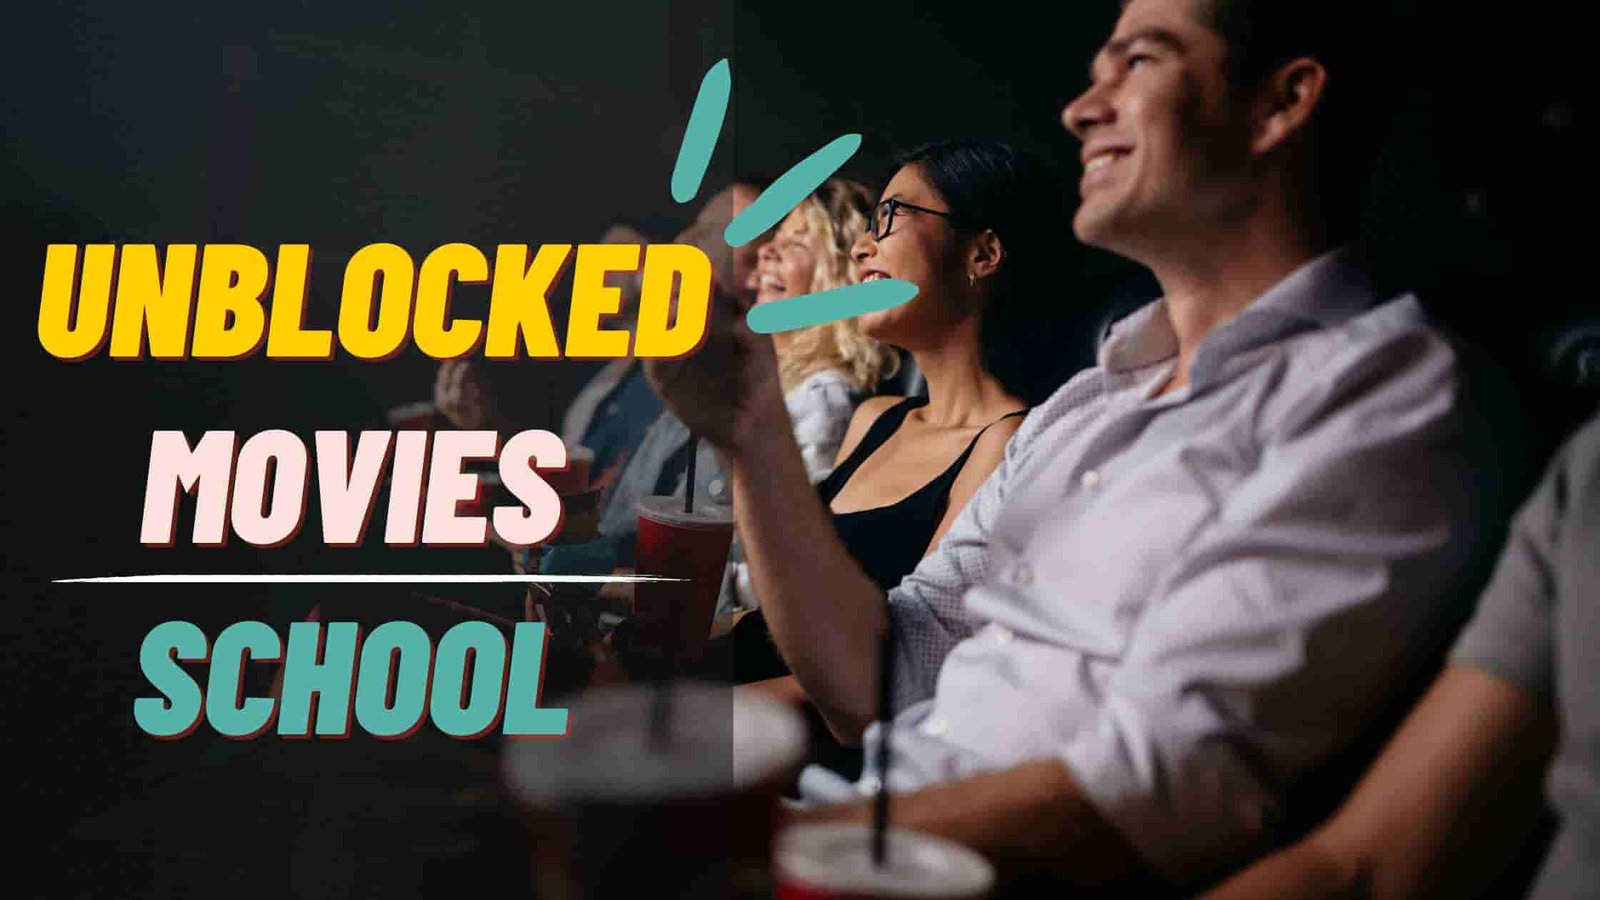 Unblocked Movies at School